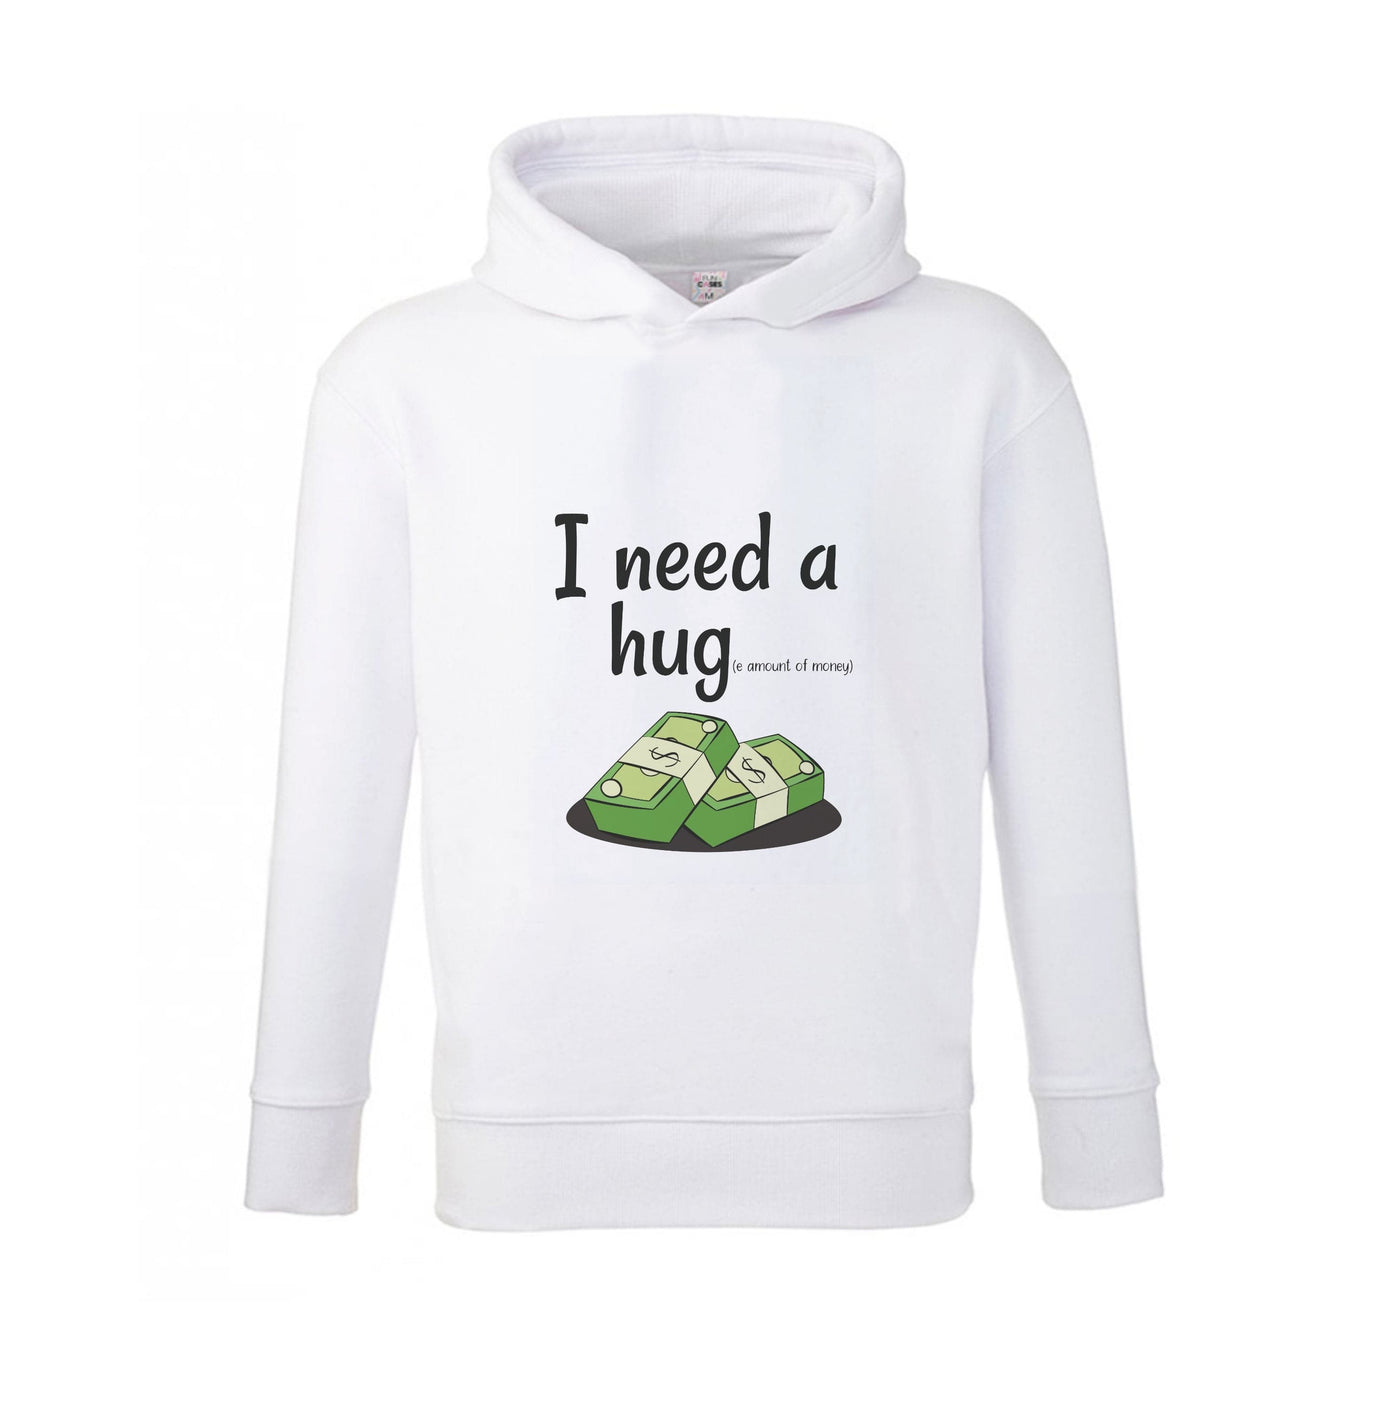 I Need A Hug - Funny Quotes Kids Hoodie